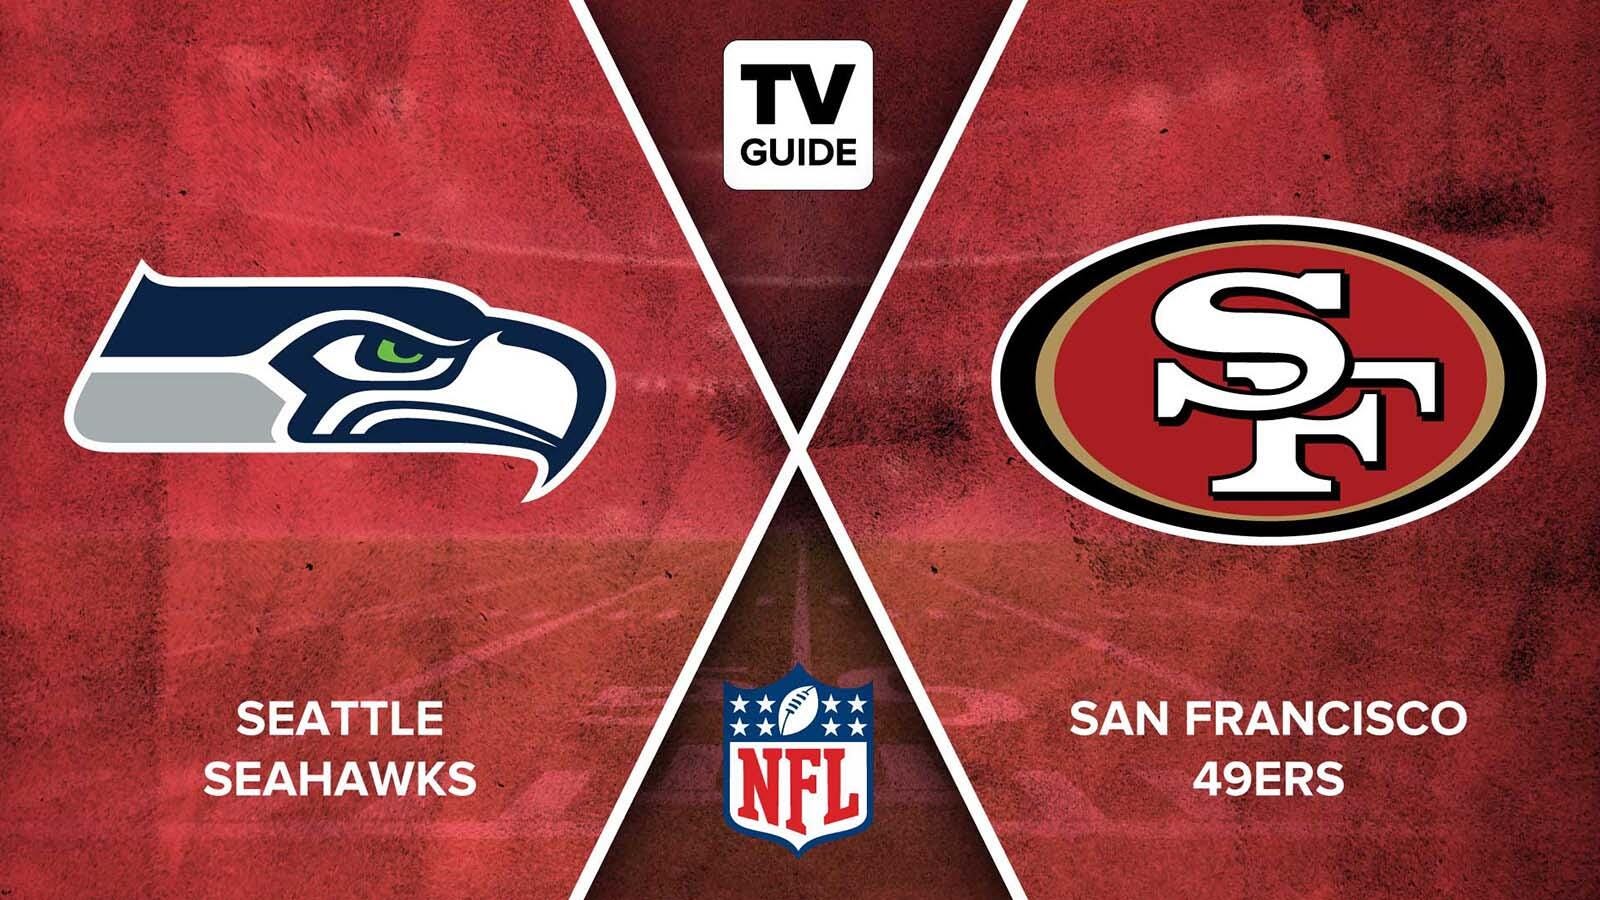 49ers vs seahawks live streaming